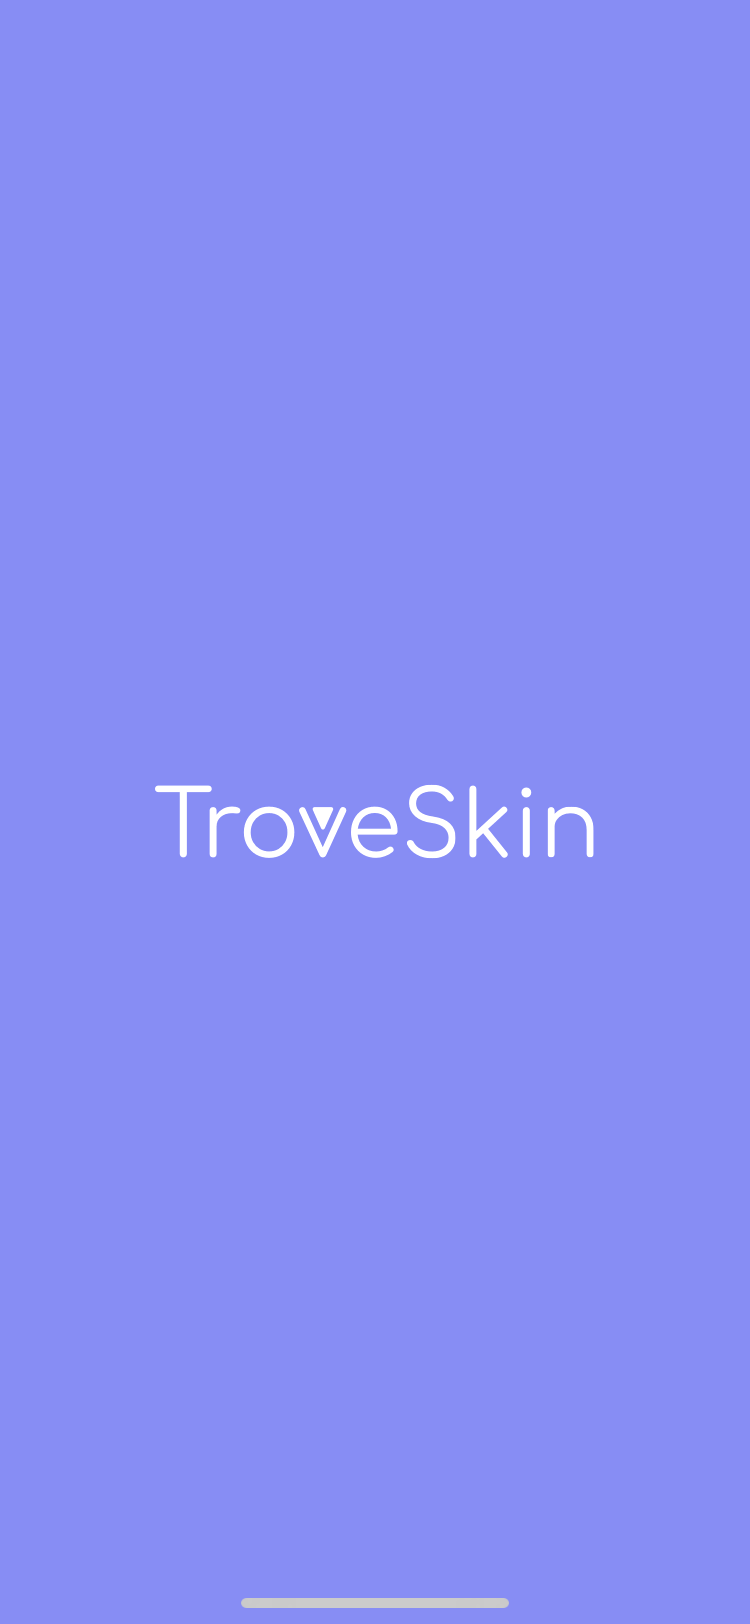 trove skin startup page